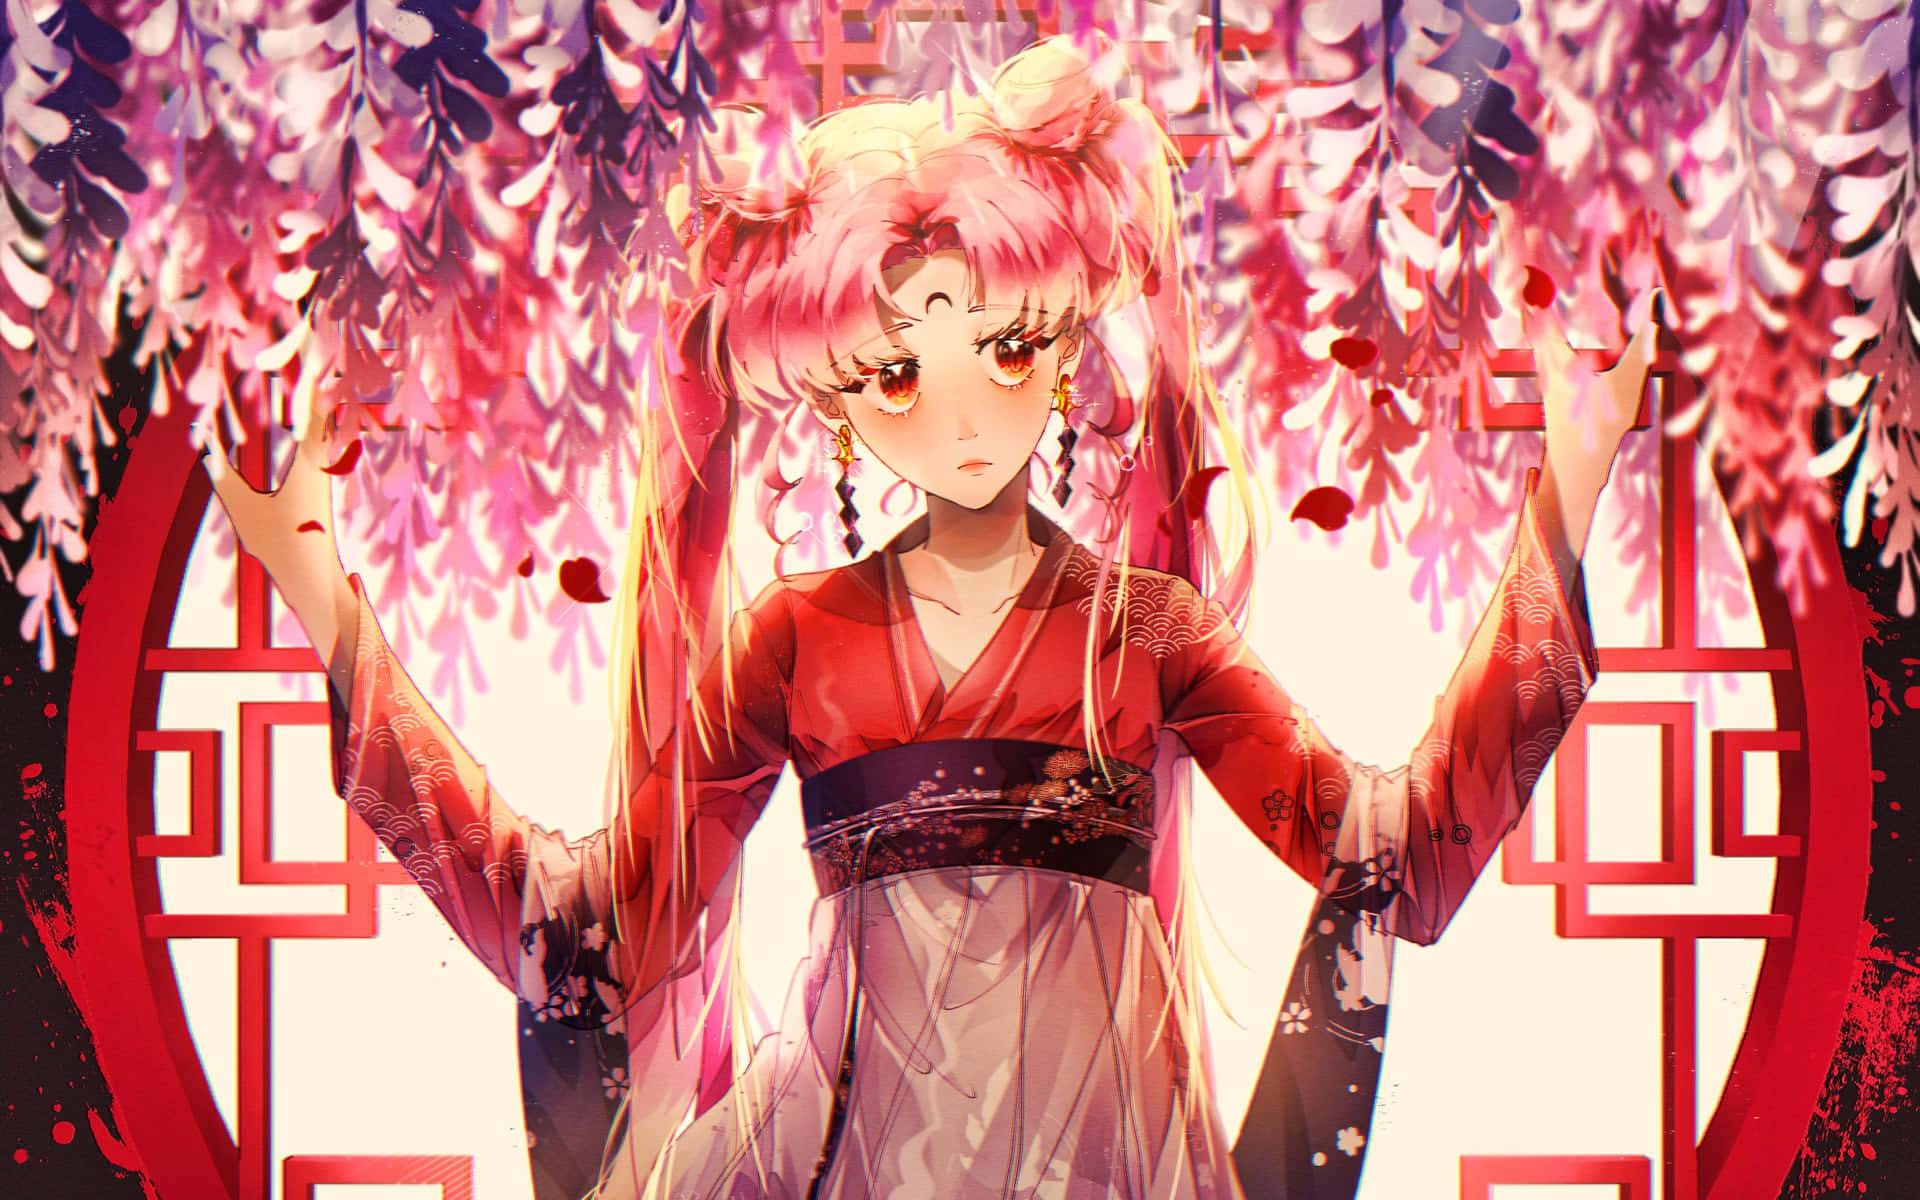 Chibiusatsukino, Enkelin Von Usagi Tsukino - Der Titelgebenden Sailor Moon. Wallpaper